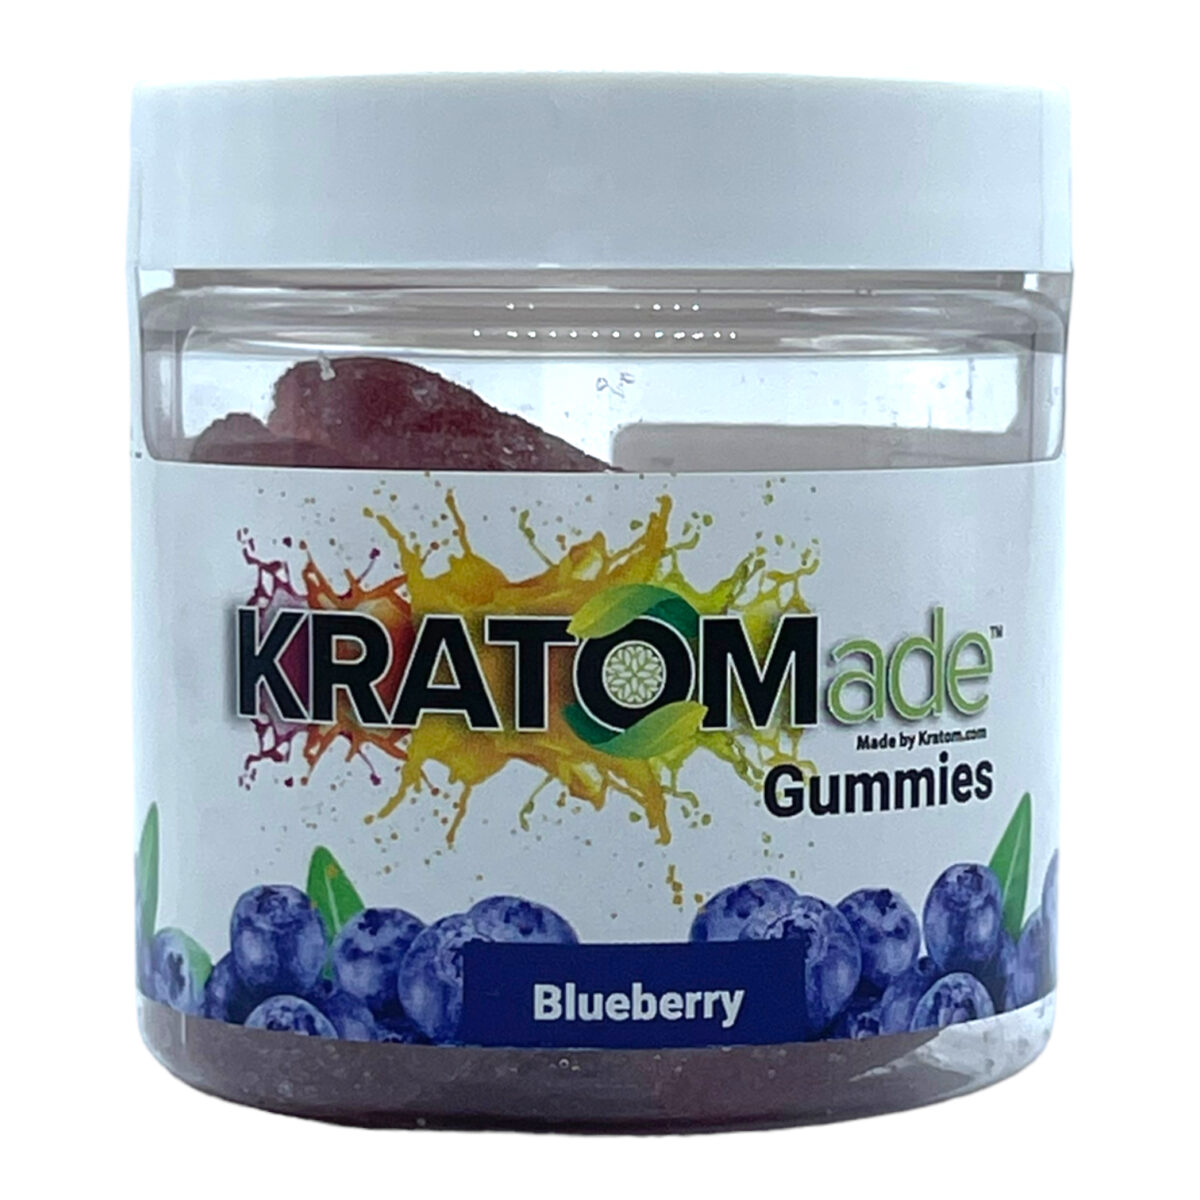 Kratomade Blueberry Gummies – 8ct